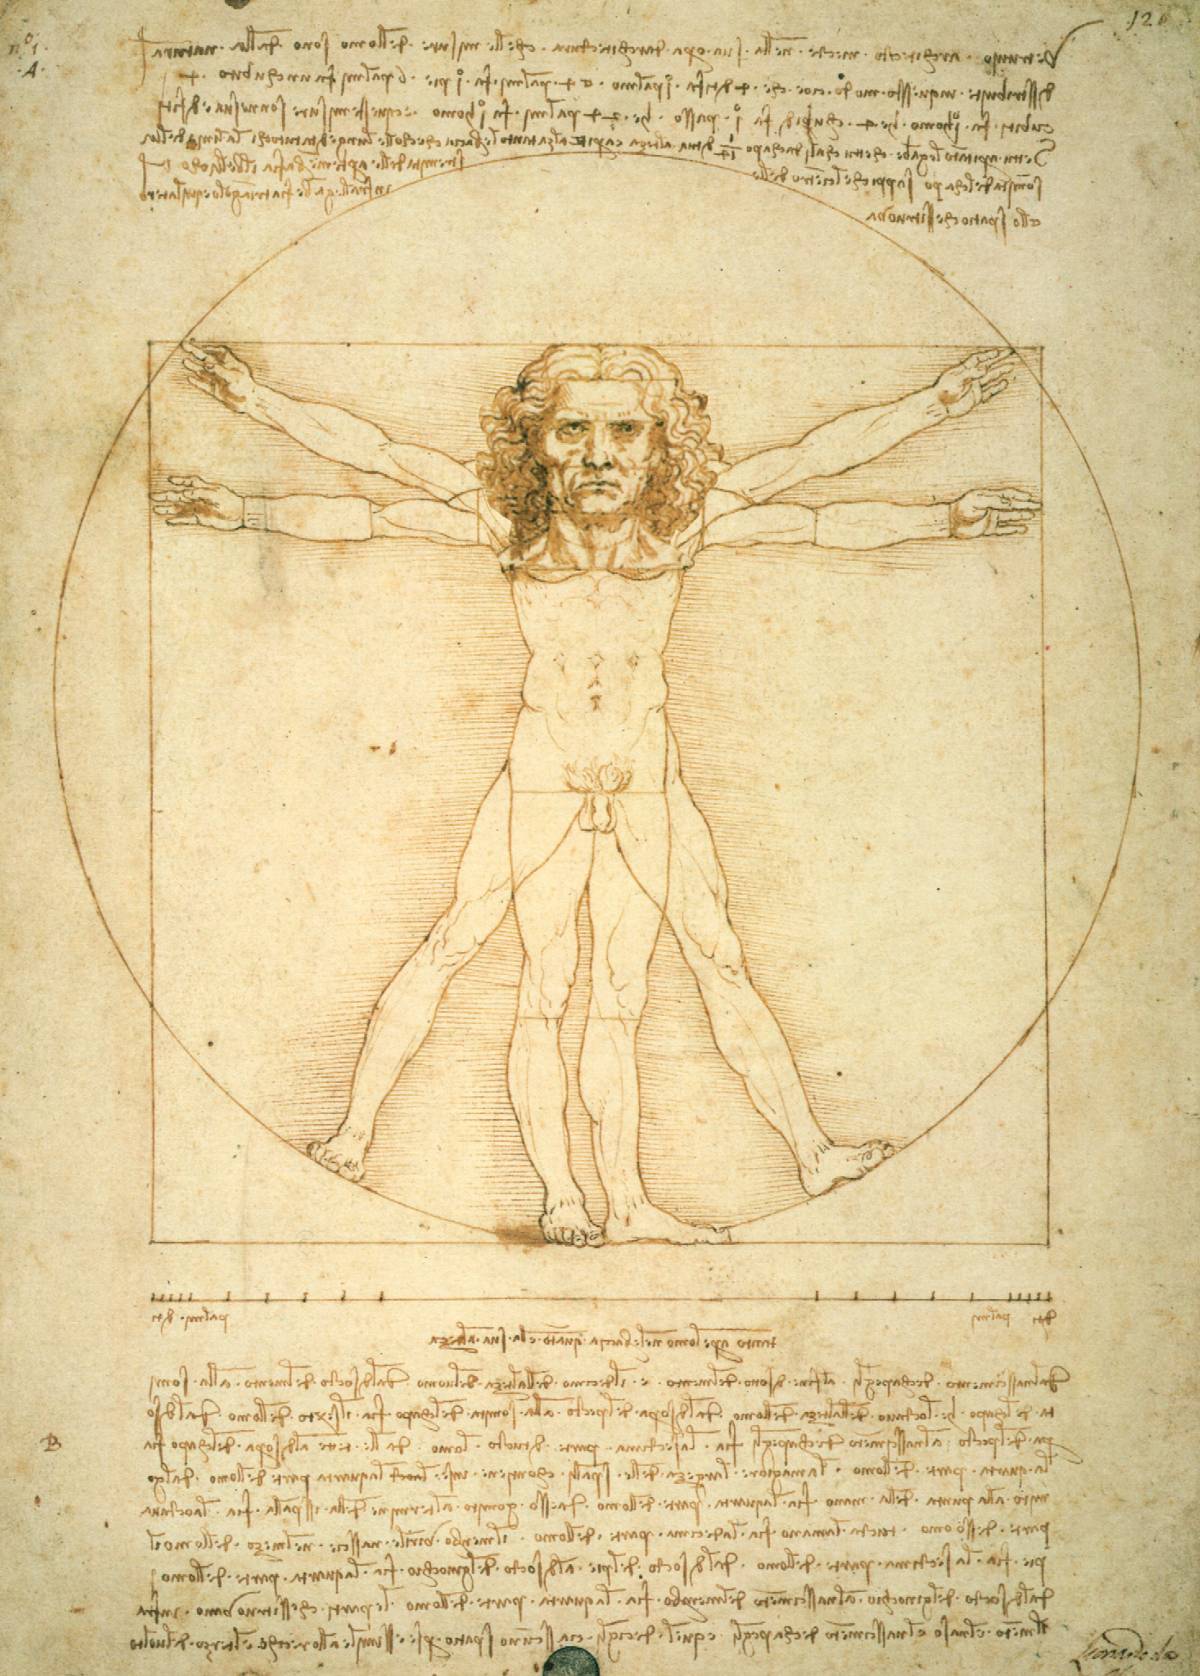 Scoperta opera "firmata" da Leonardo 
Grazie a un'impronta digitale